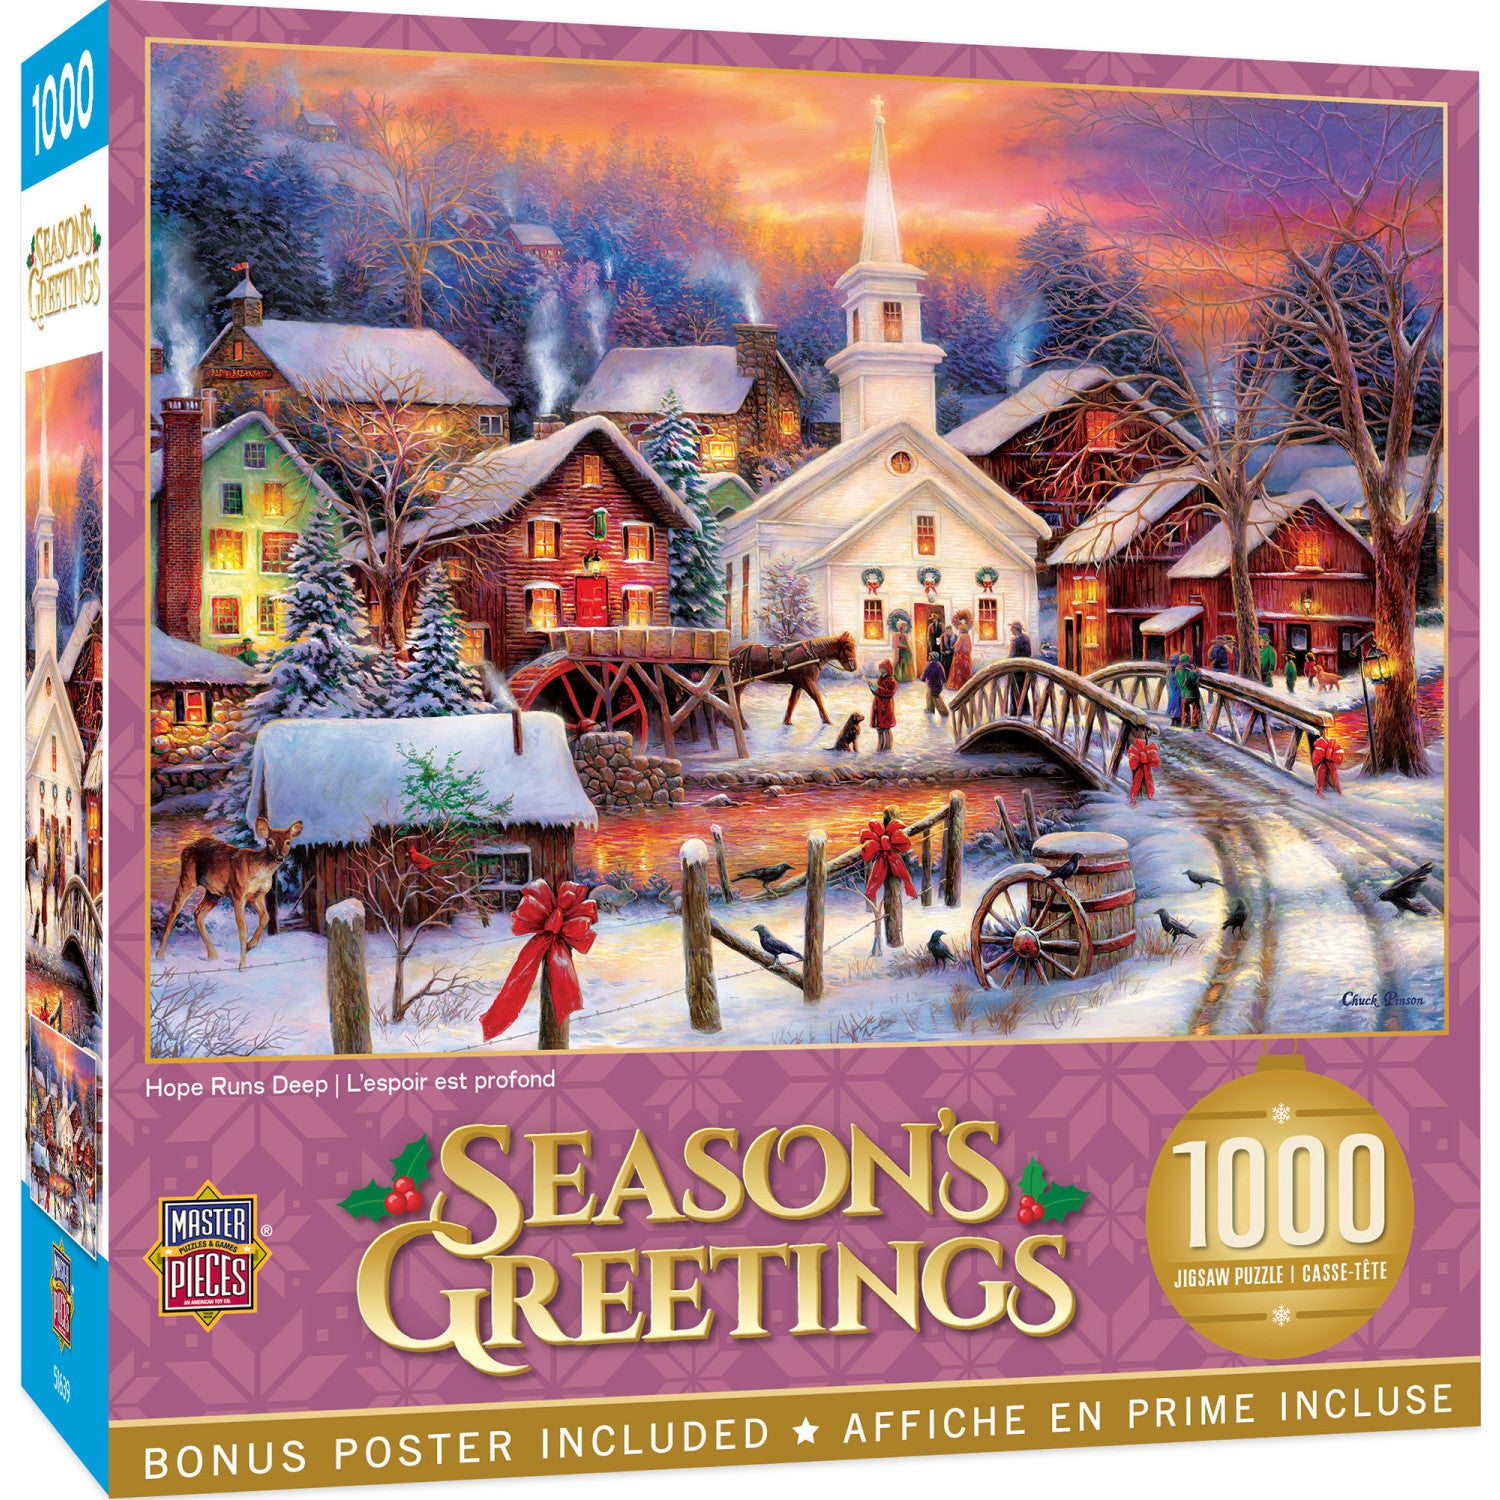 Season's Greetings - Hope Runs Deep 1000 Piece Jigsaw Puzzle